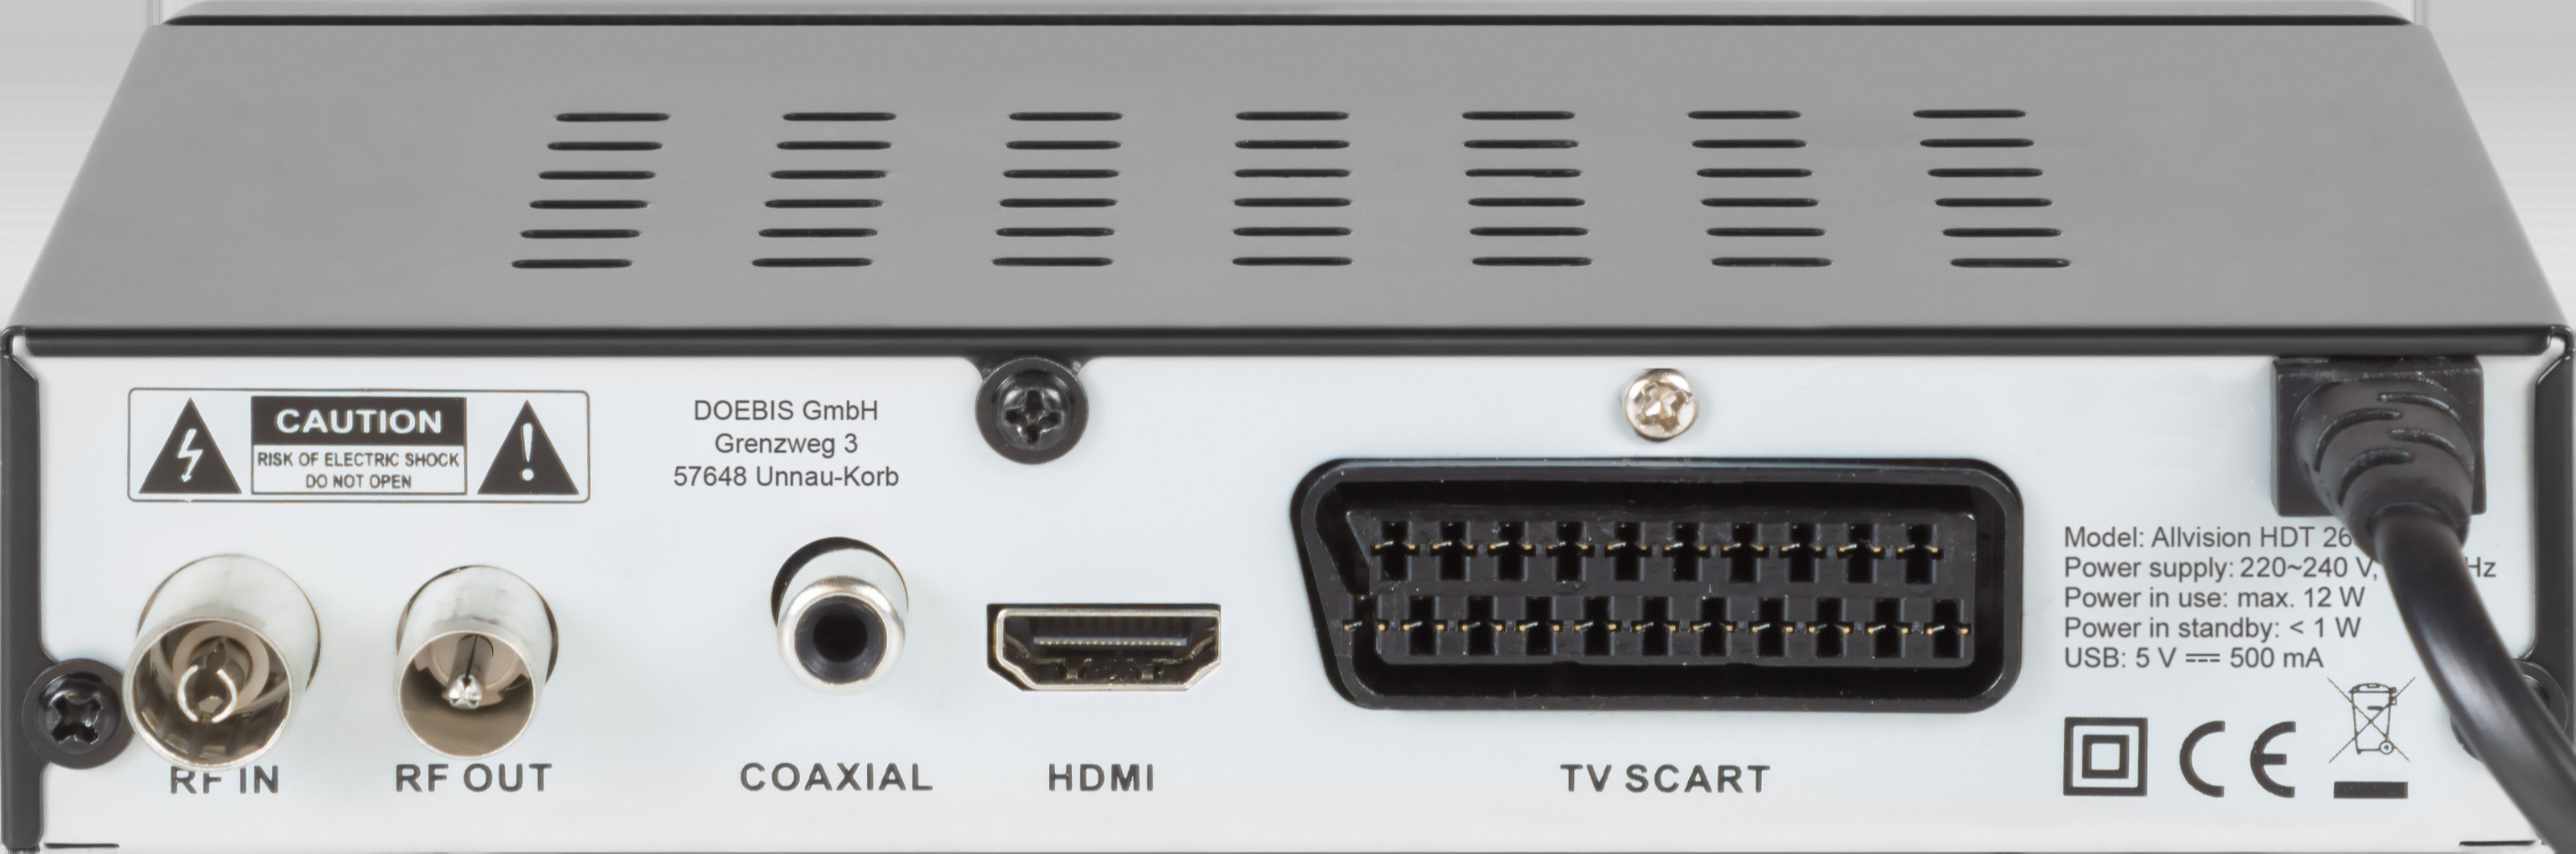 ALLVISION HDT 2650 DVB-T2 HD (HDTV, HD, DVB-T2 Receiver Schwarz)